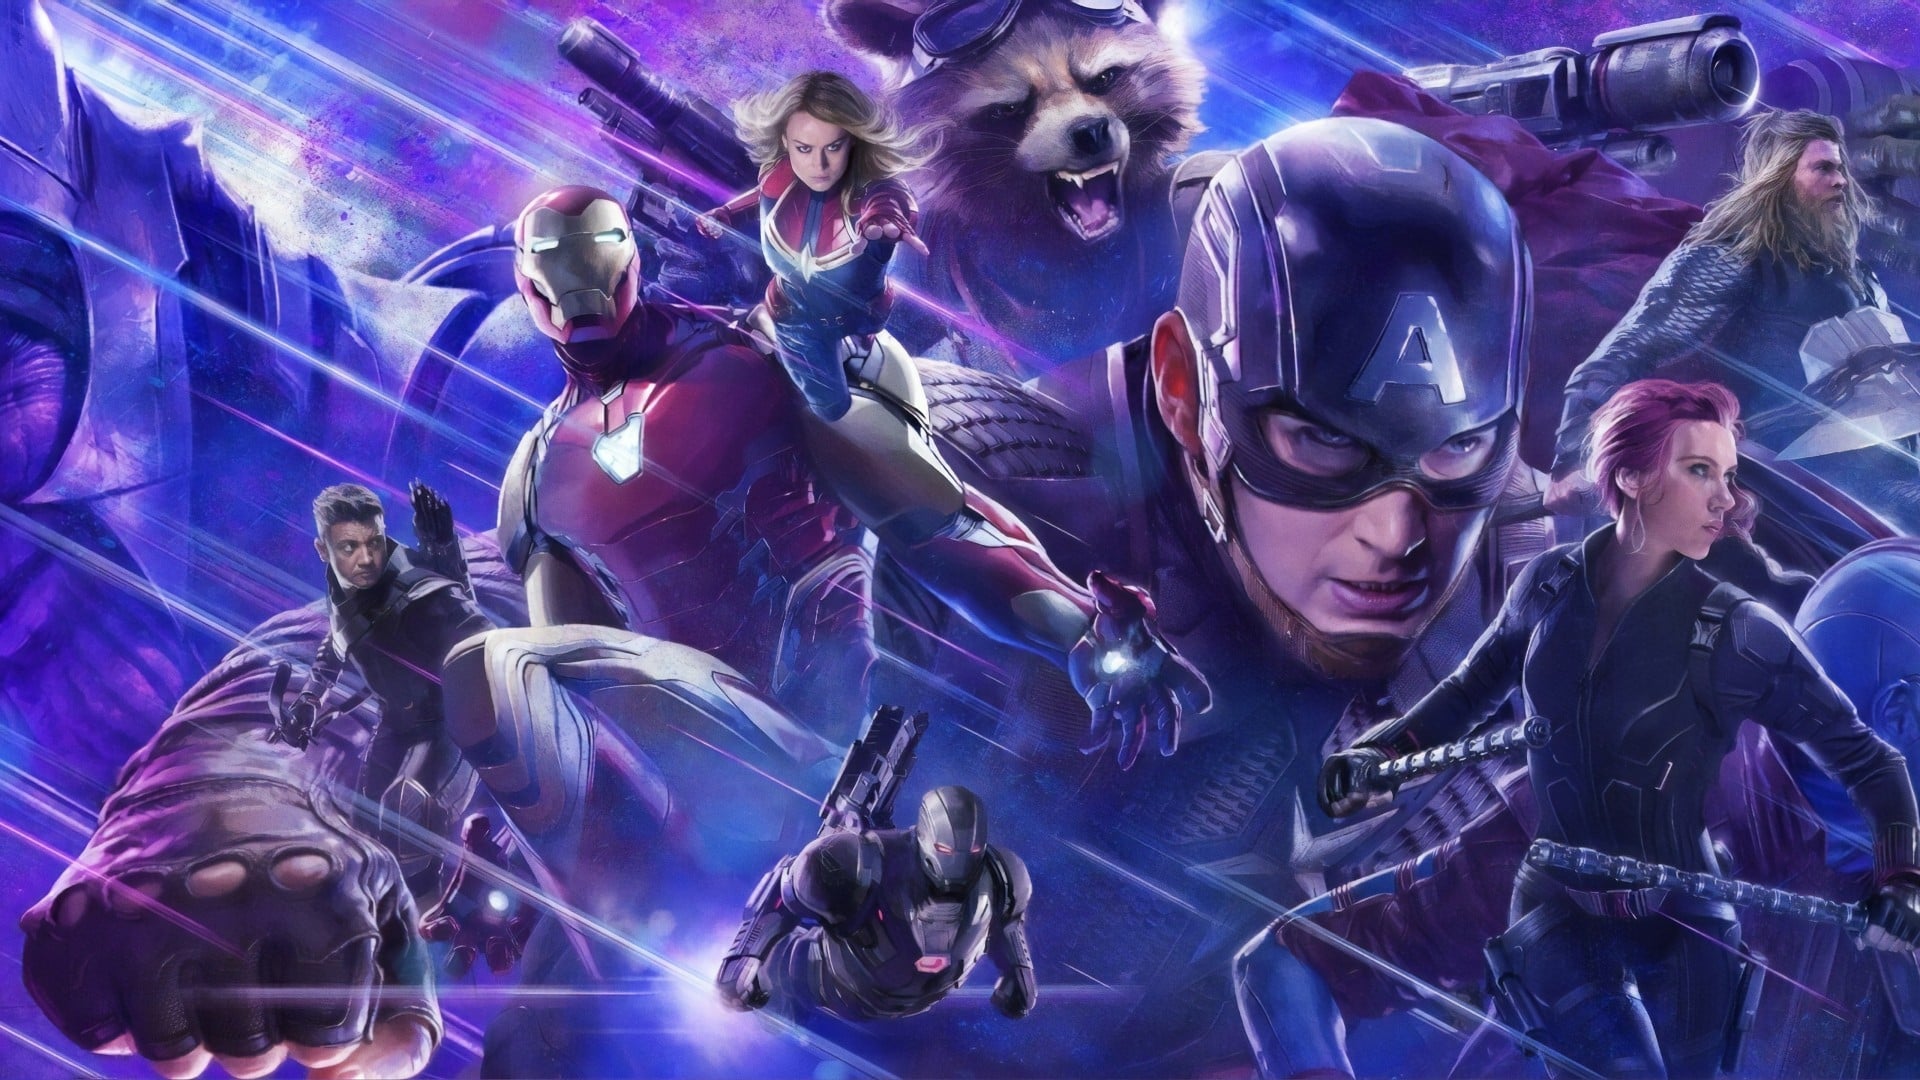 People 1920x1080 Avengers Endgame Iron Man Captain America Thor Hawkeye Black Widow War Machine  Captain Marvel Rocket Raccoon Marvel Cinematic Universe digital art